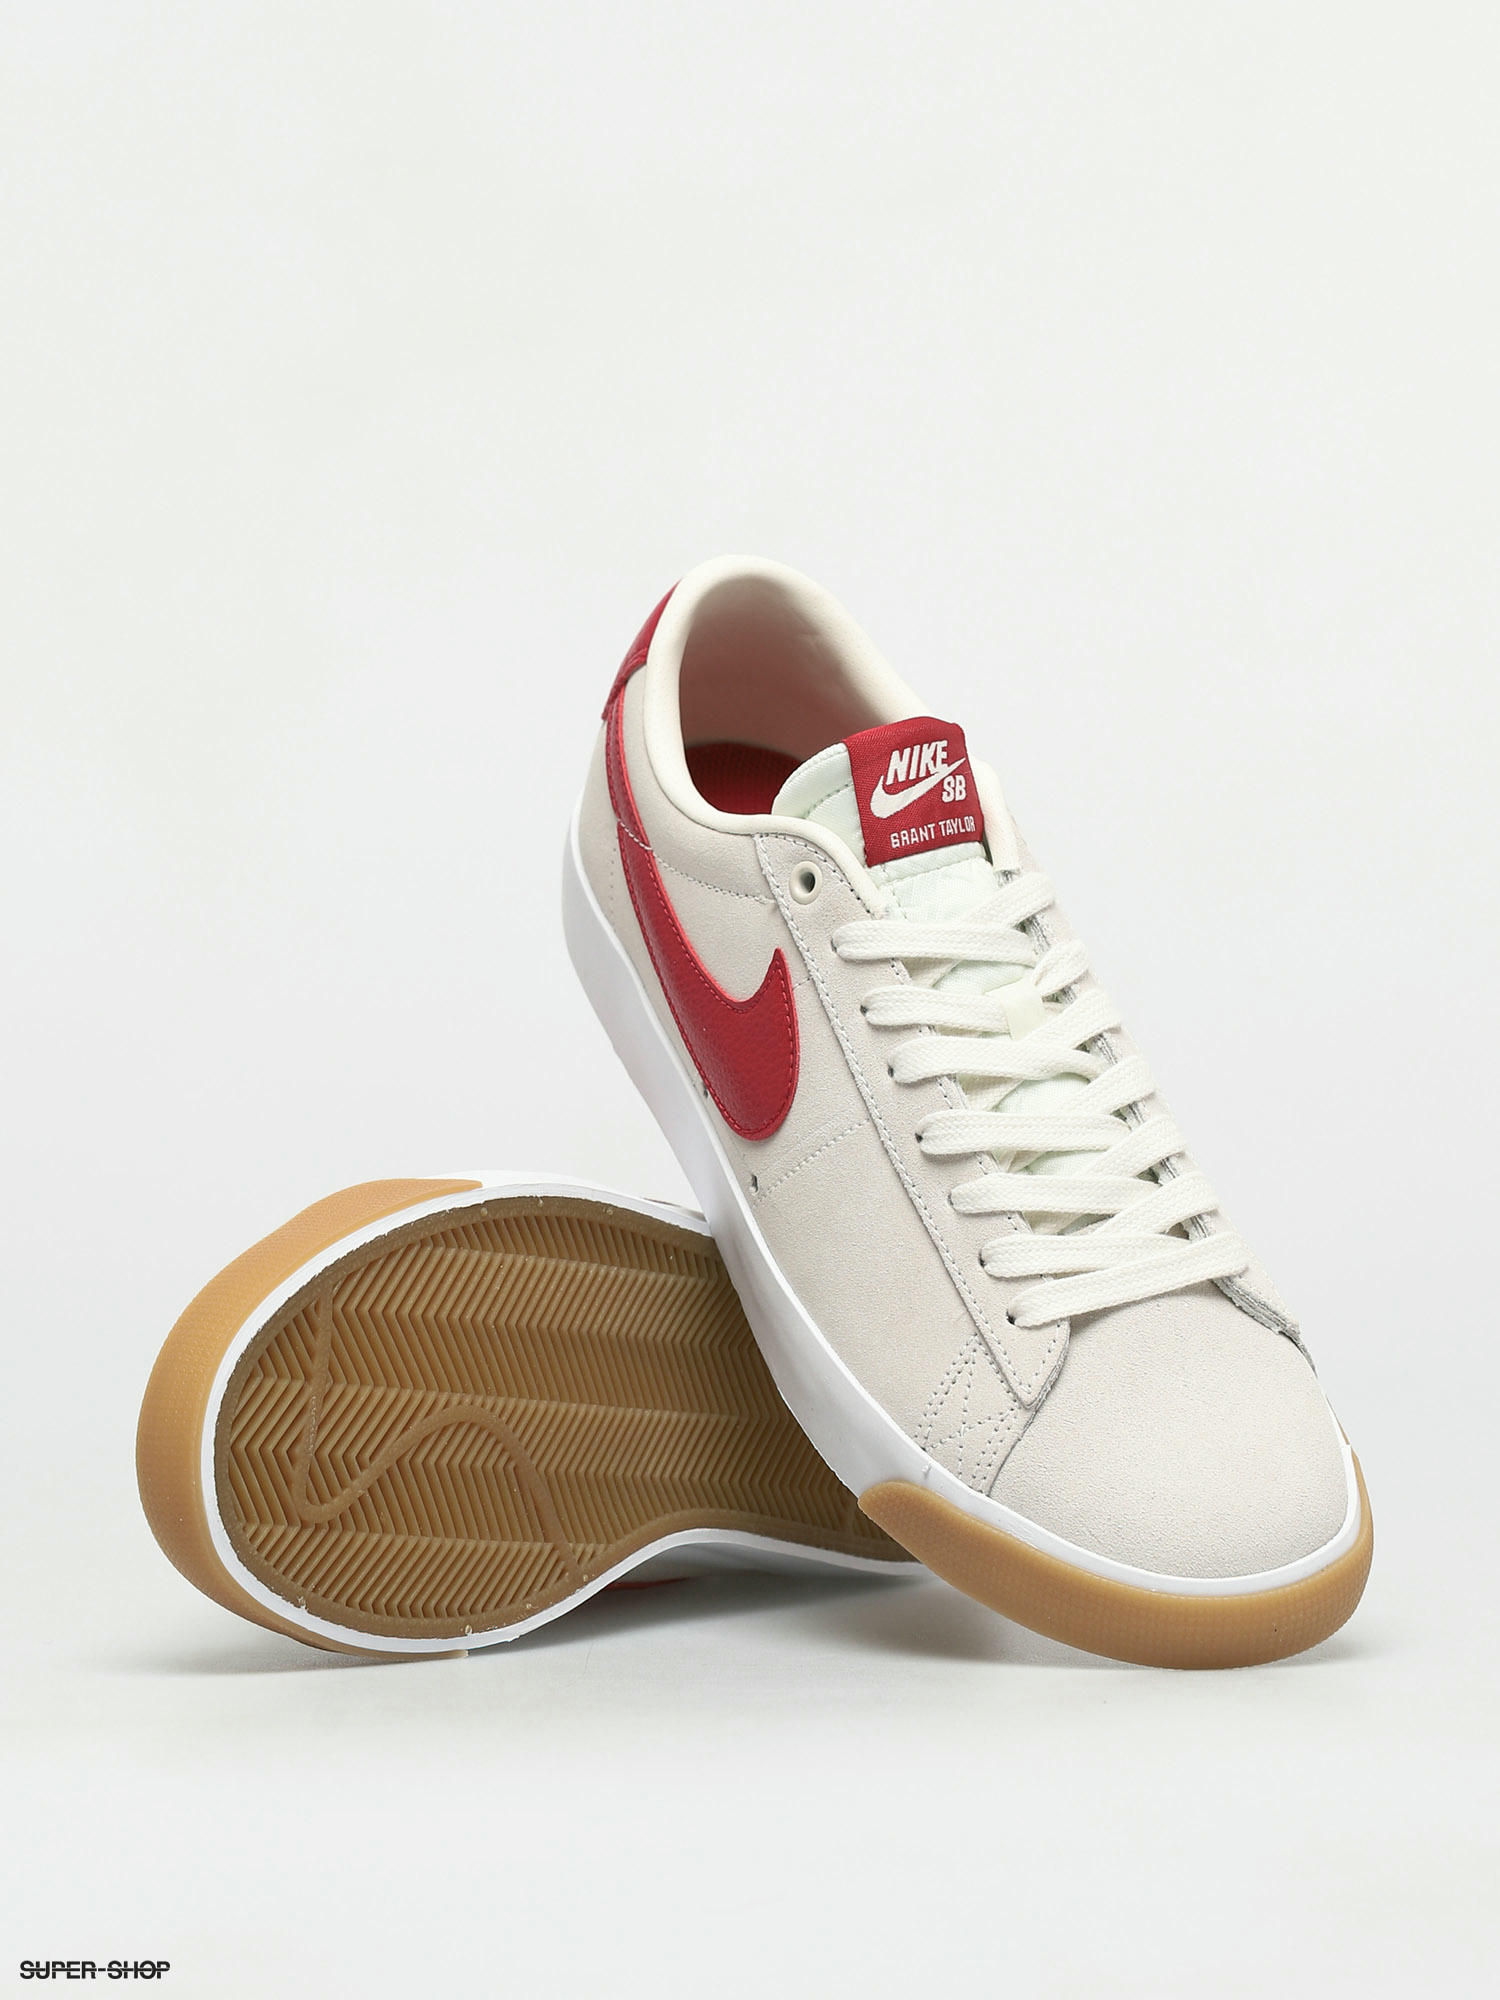 Onderdompeling vredig chrysant Nike SB Blazer Low Gt Shoes (sail/cardinal red white gum light brown)